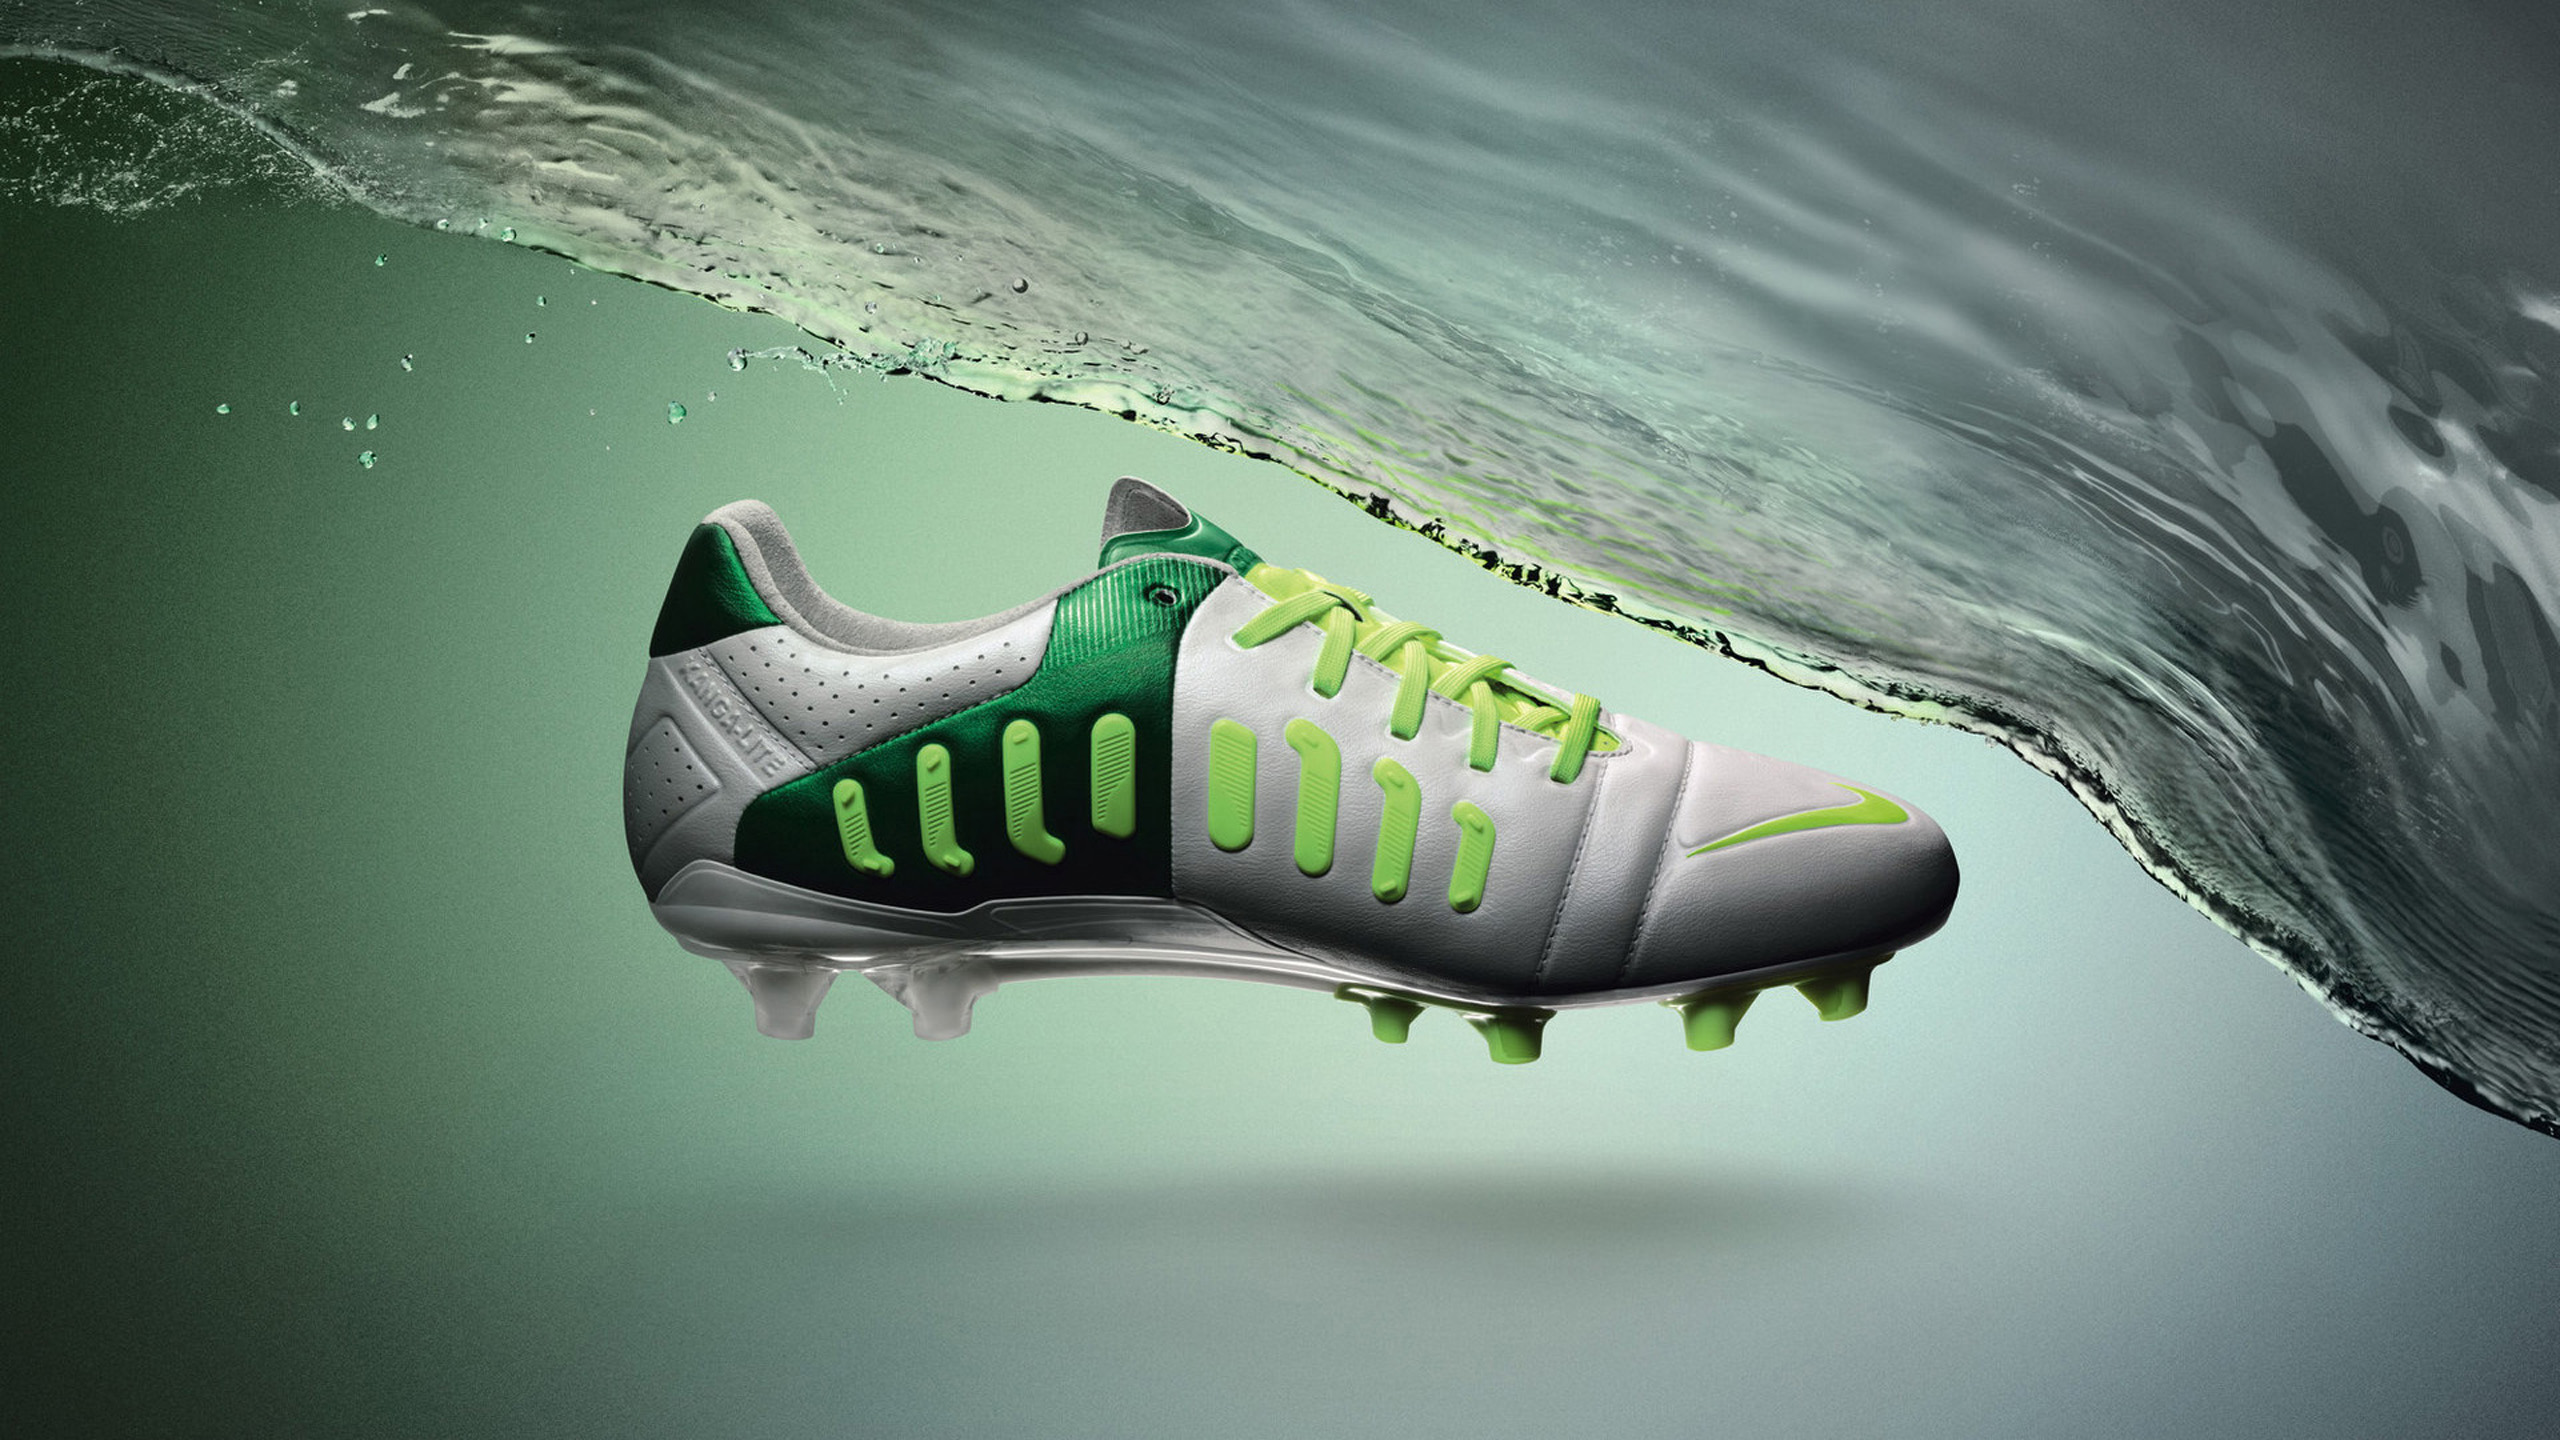 Nike Football Soccer Shoes Wallpaper In